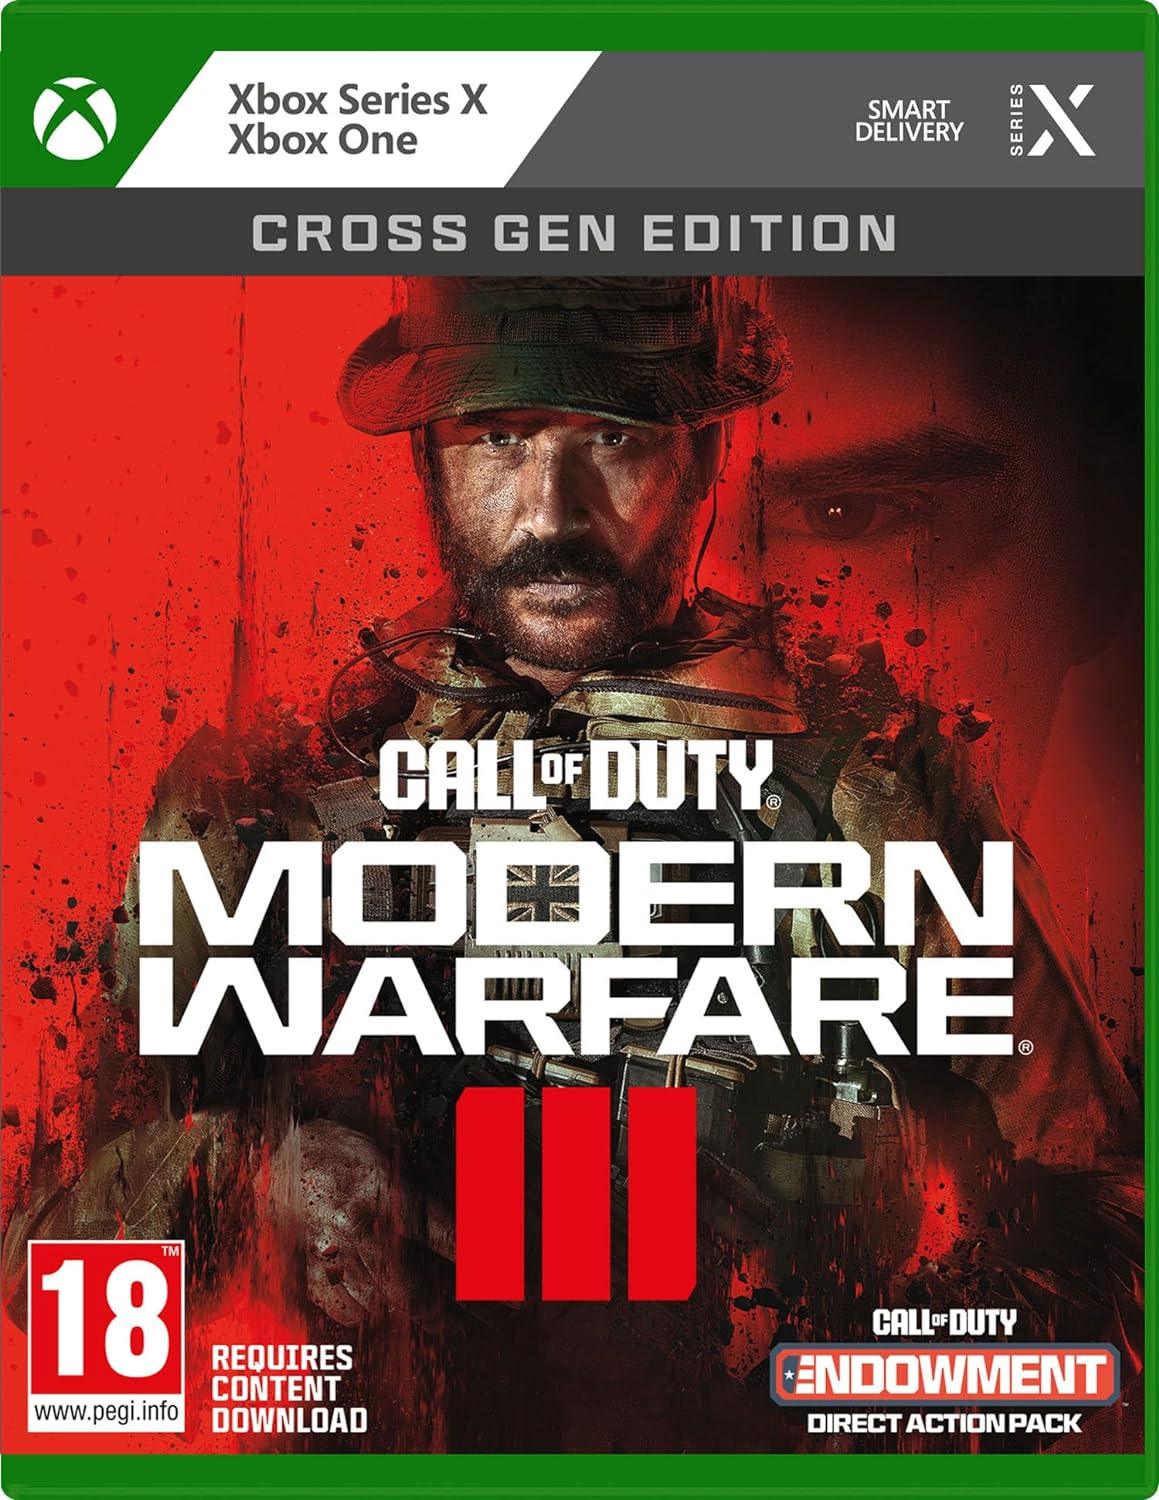 XBOX - Call of Duty: Modern Warfare III - Want a New Gadget